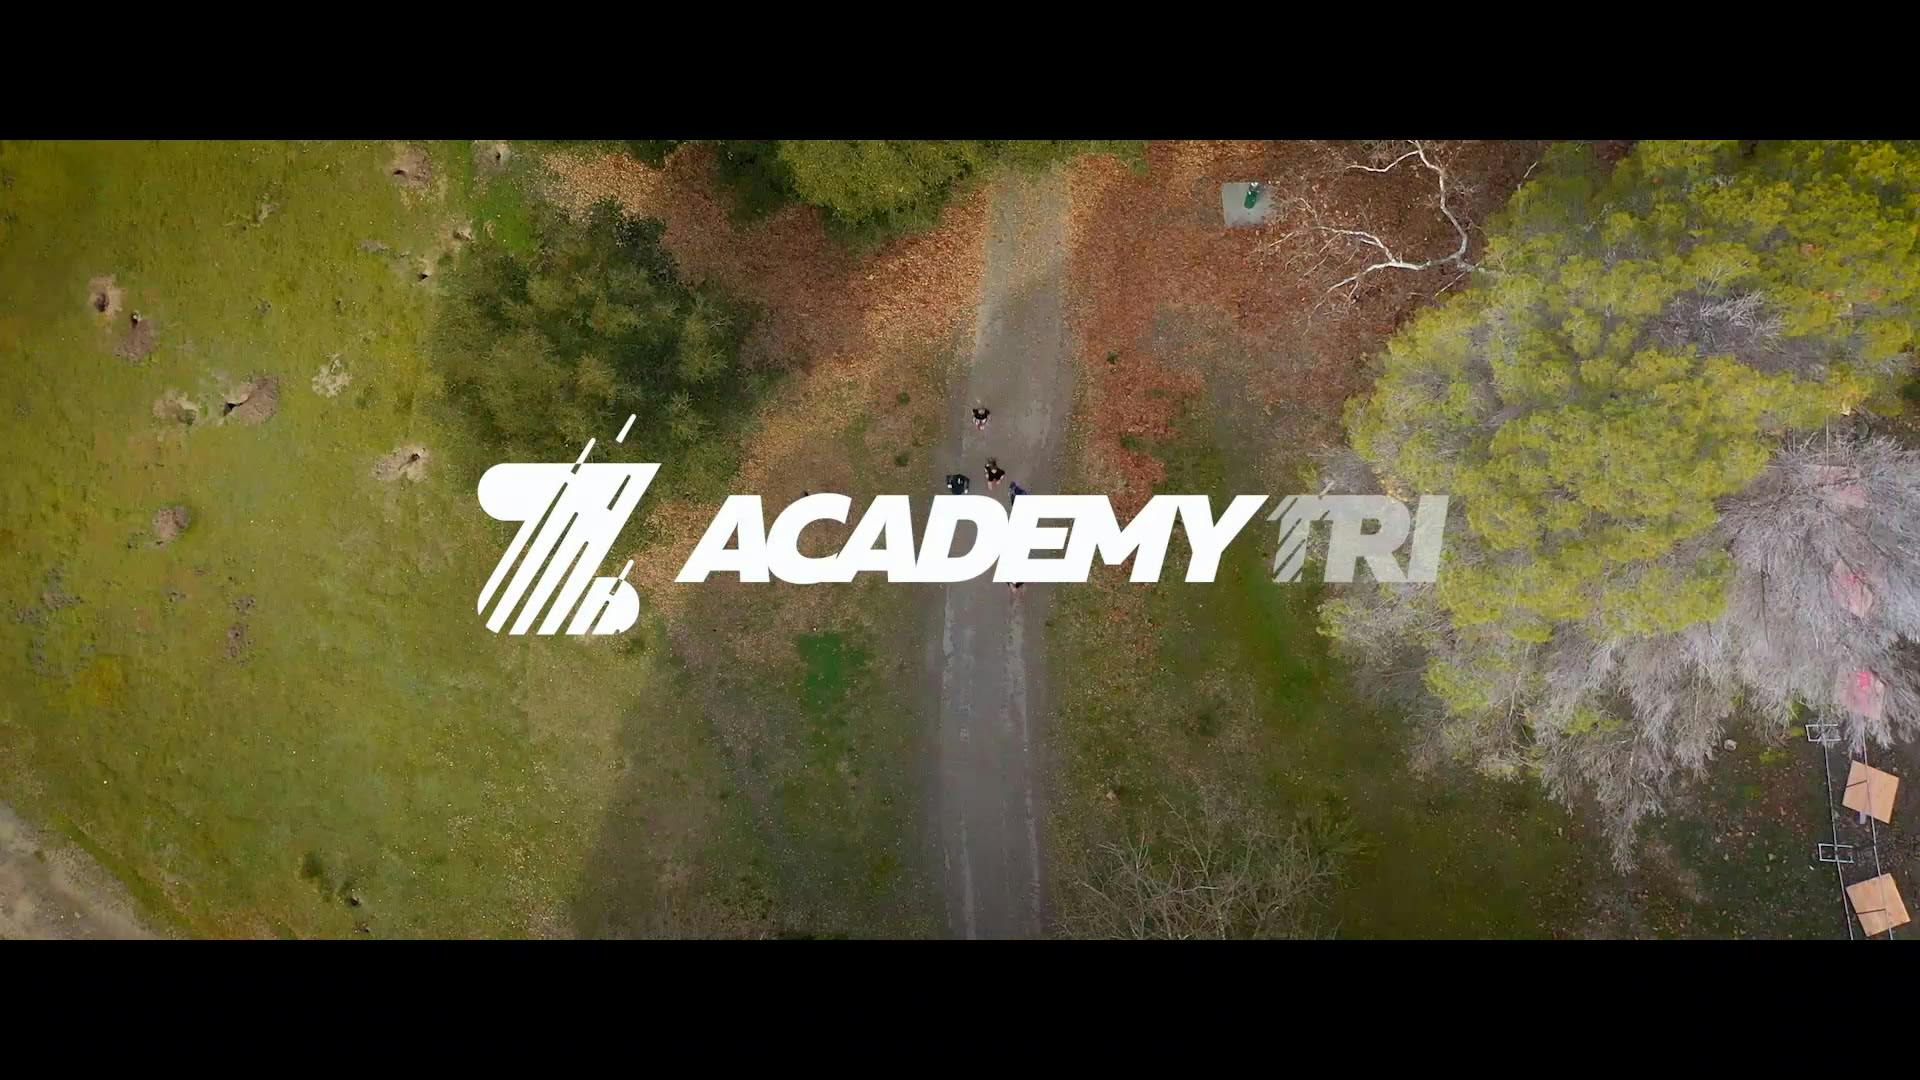 Zwift Academy Tri: Road to St George | Trailer